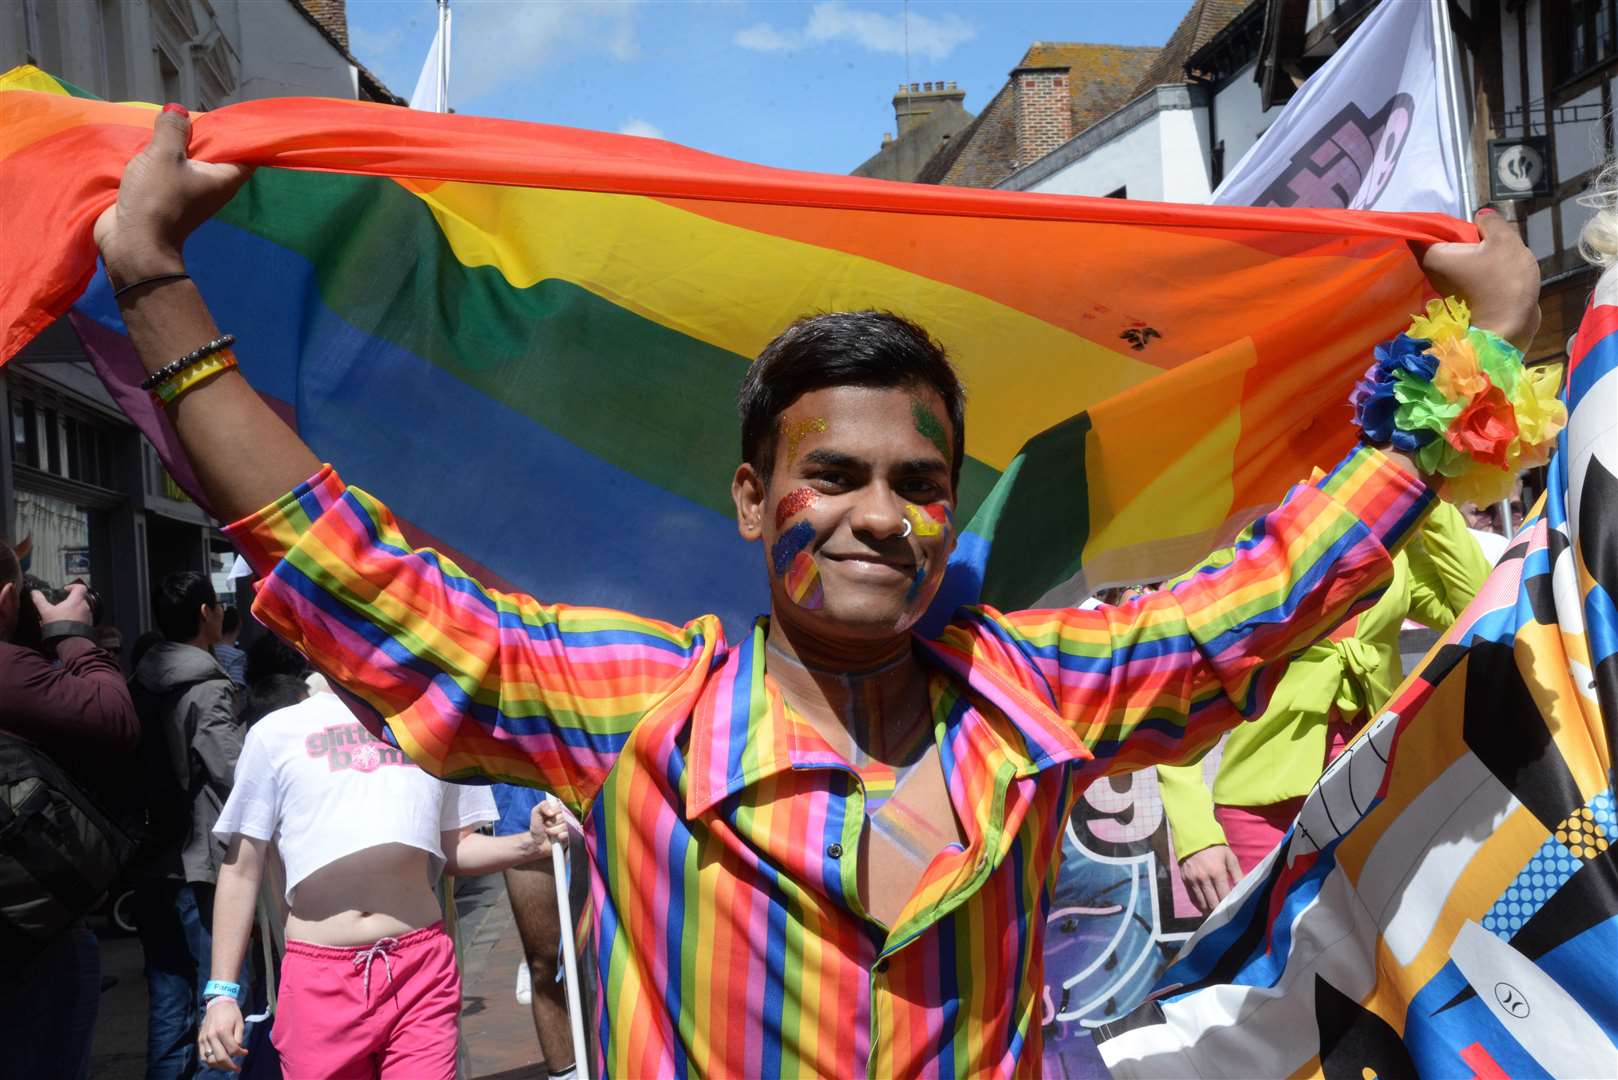 A man wearing the rainbow flag makes his way through Canterbury at Pride last year